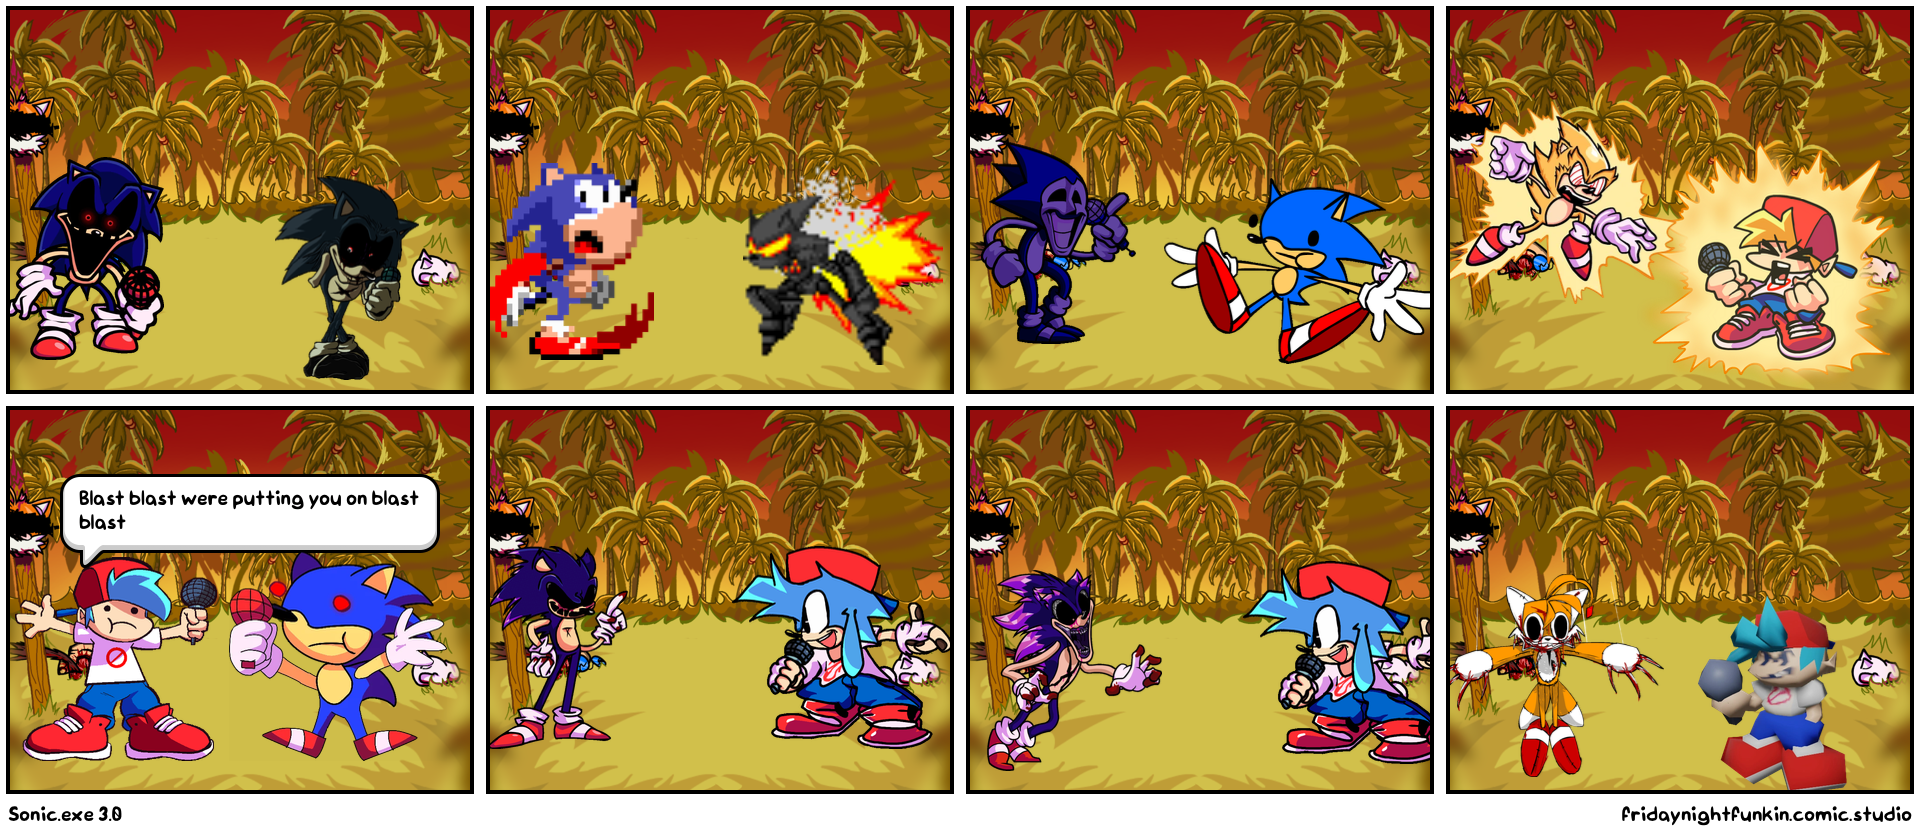 Sonic.exe 3.0